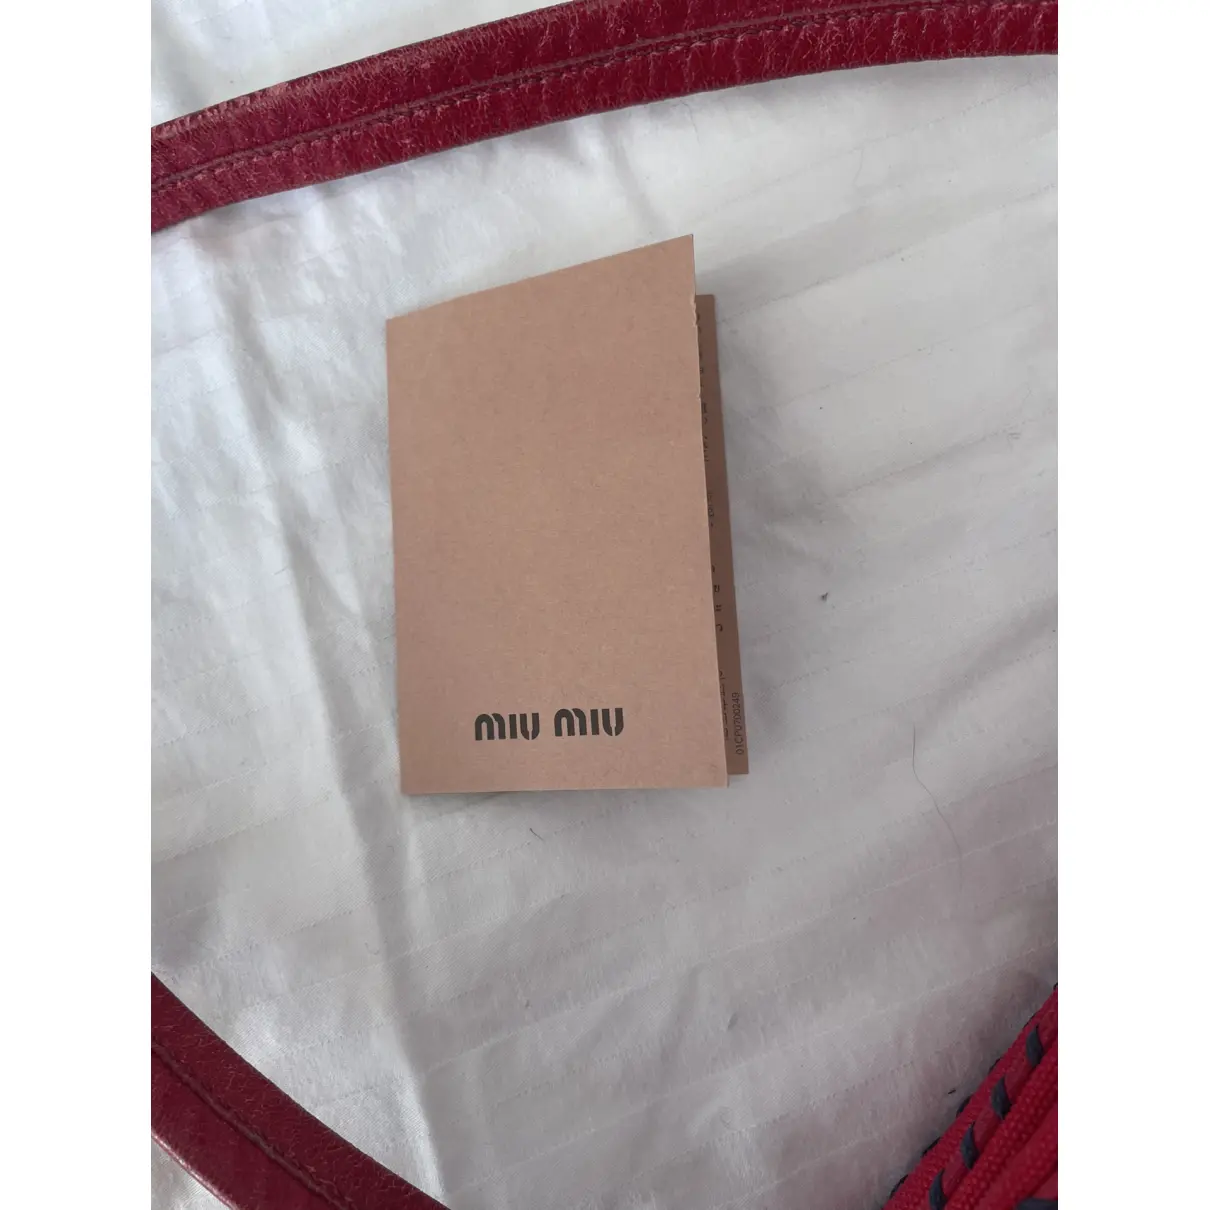 Buy Miu Miu Miu Confidential handbag online